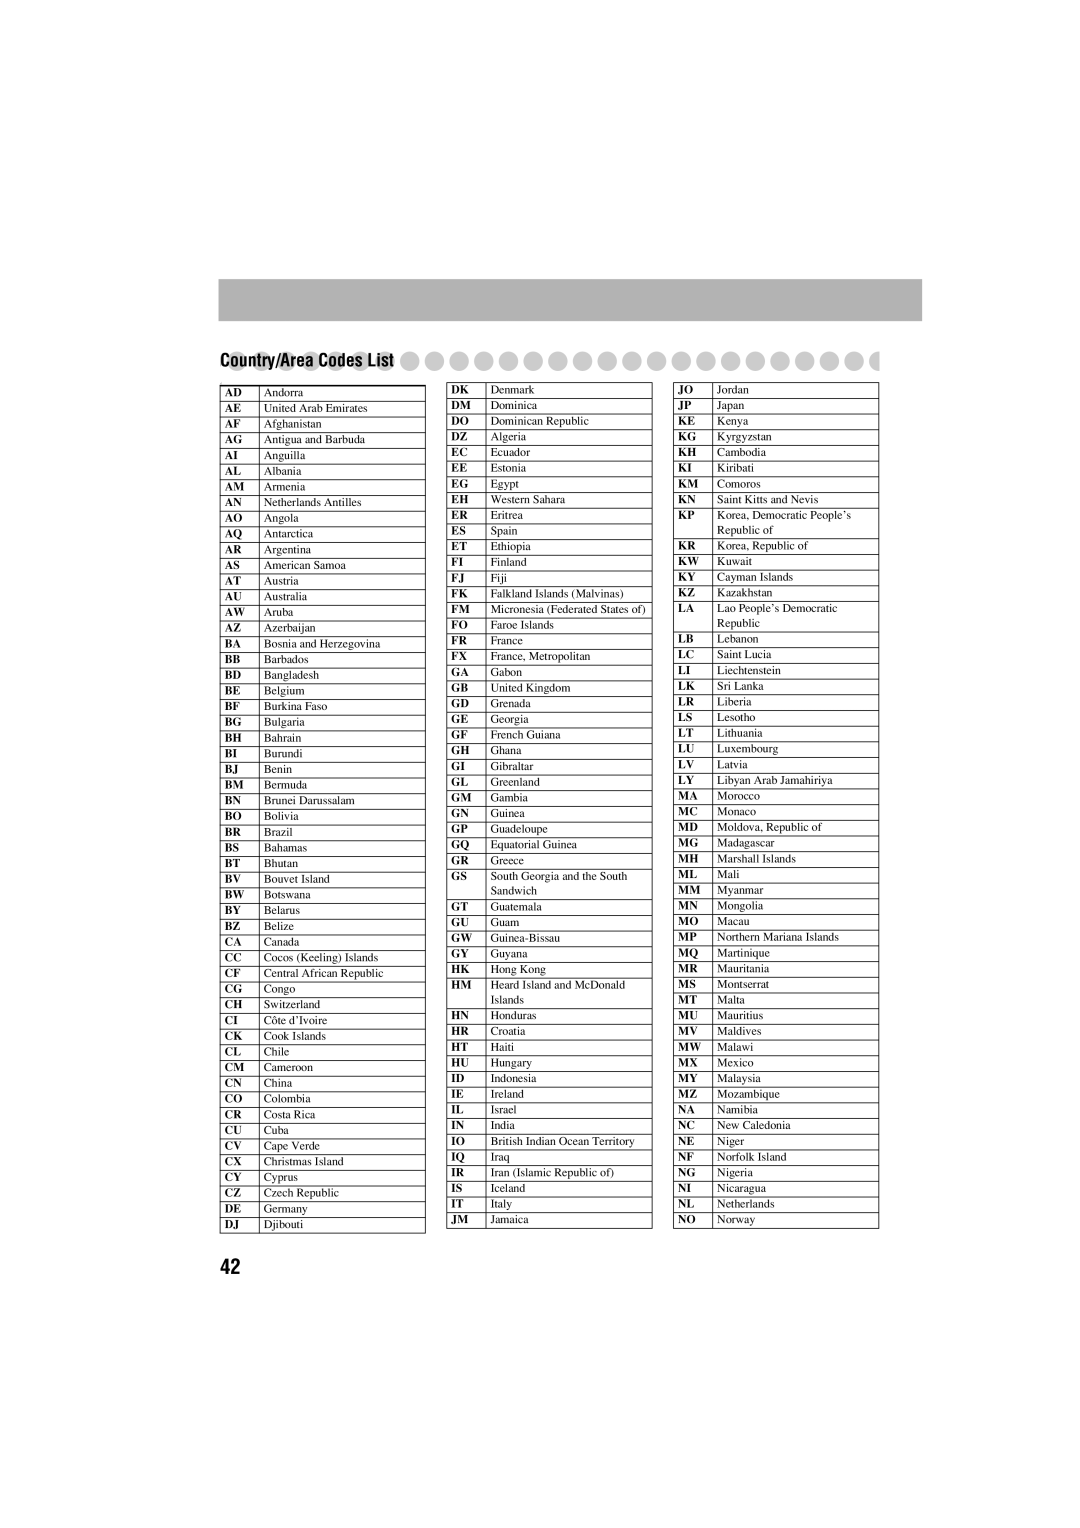 JVC FS-S77B/FS-S77S manual Country/Area Codes List, Djibouti 